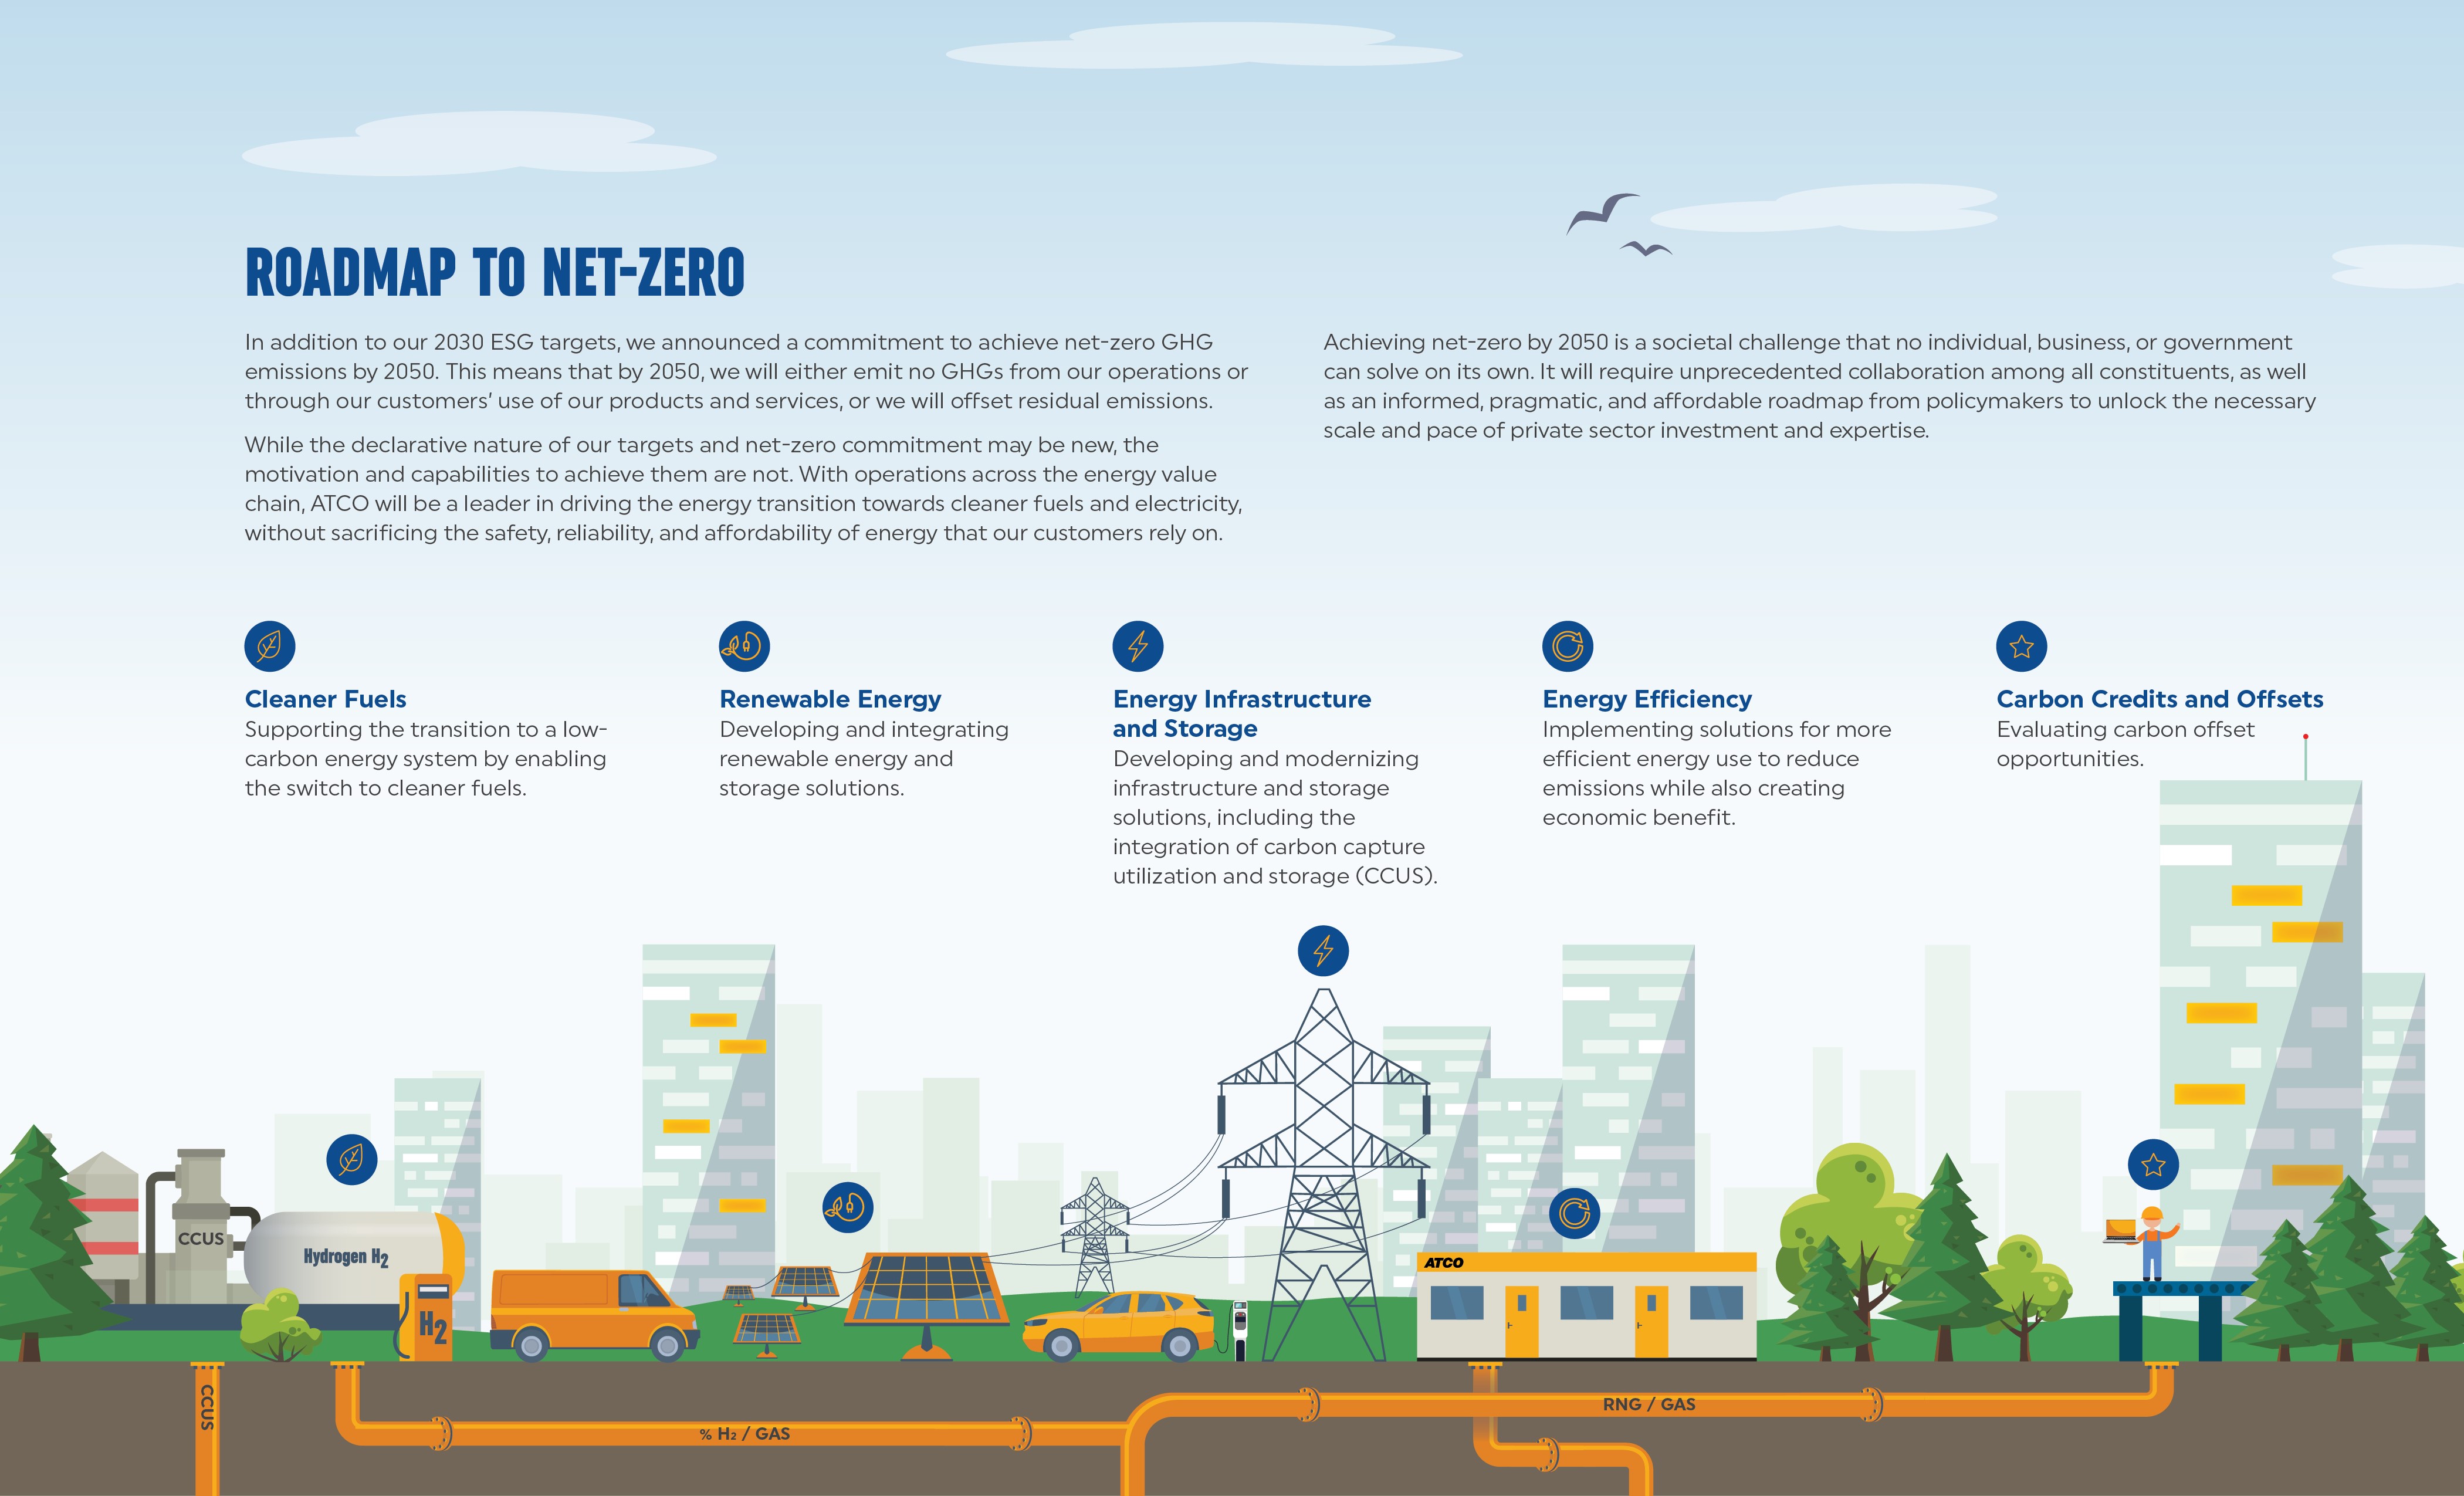 Roadmap to Net-Zero